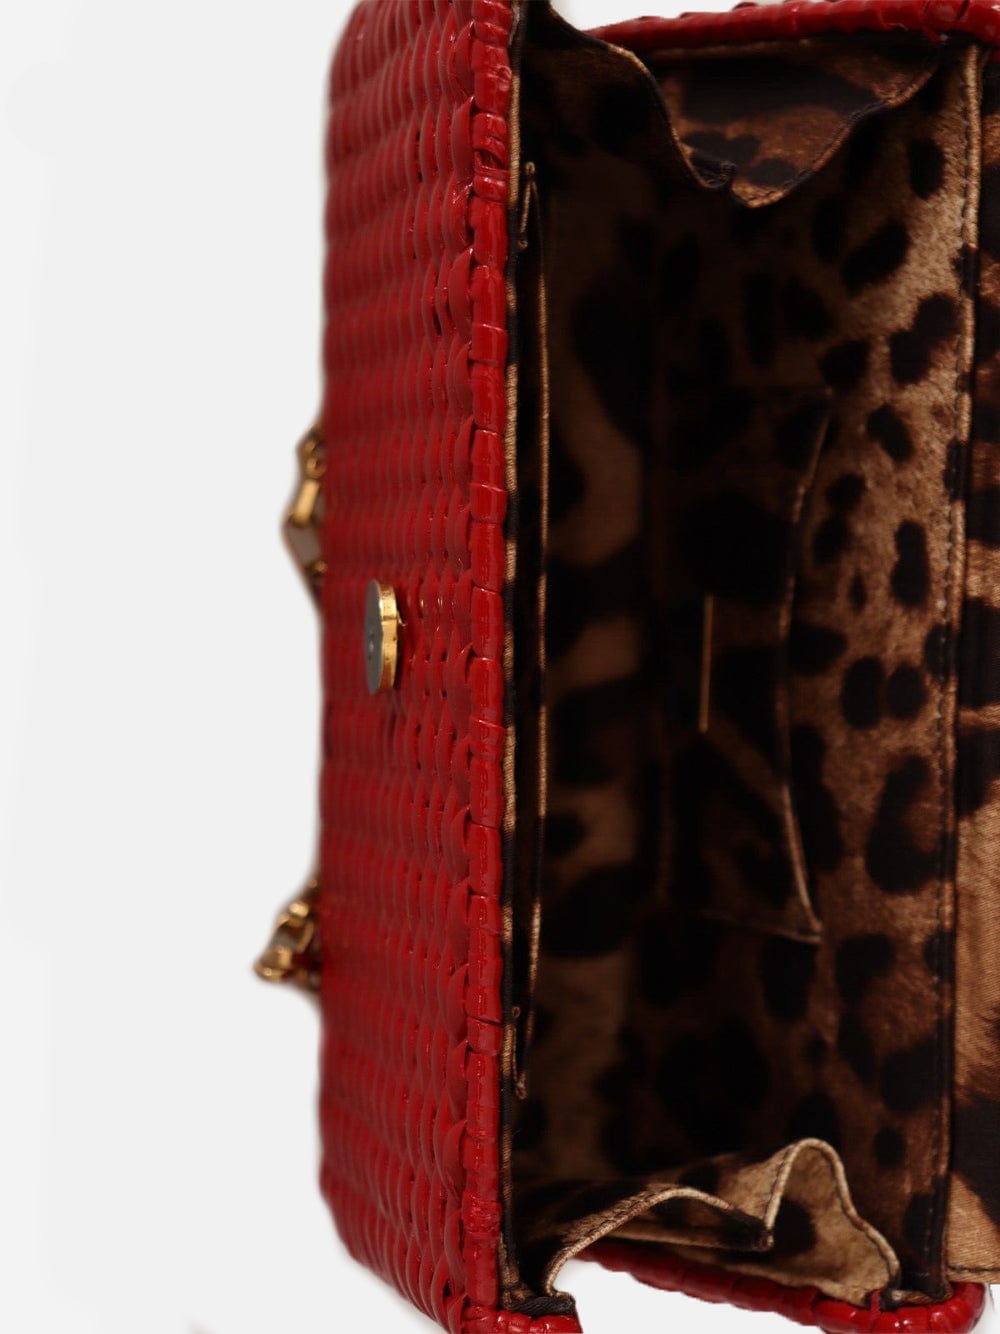 Dolce & Gabbana Wicker Logo Shoulder Bag